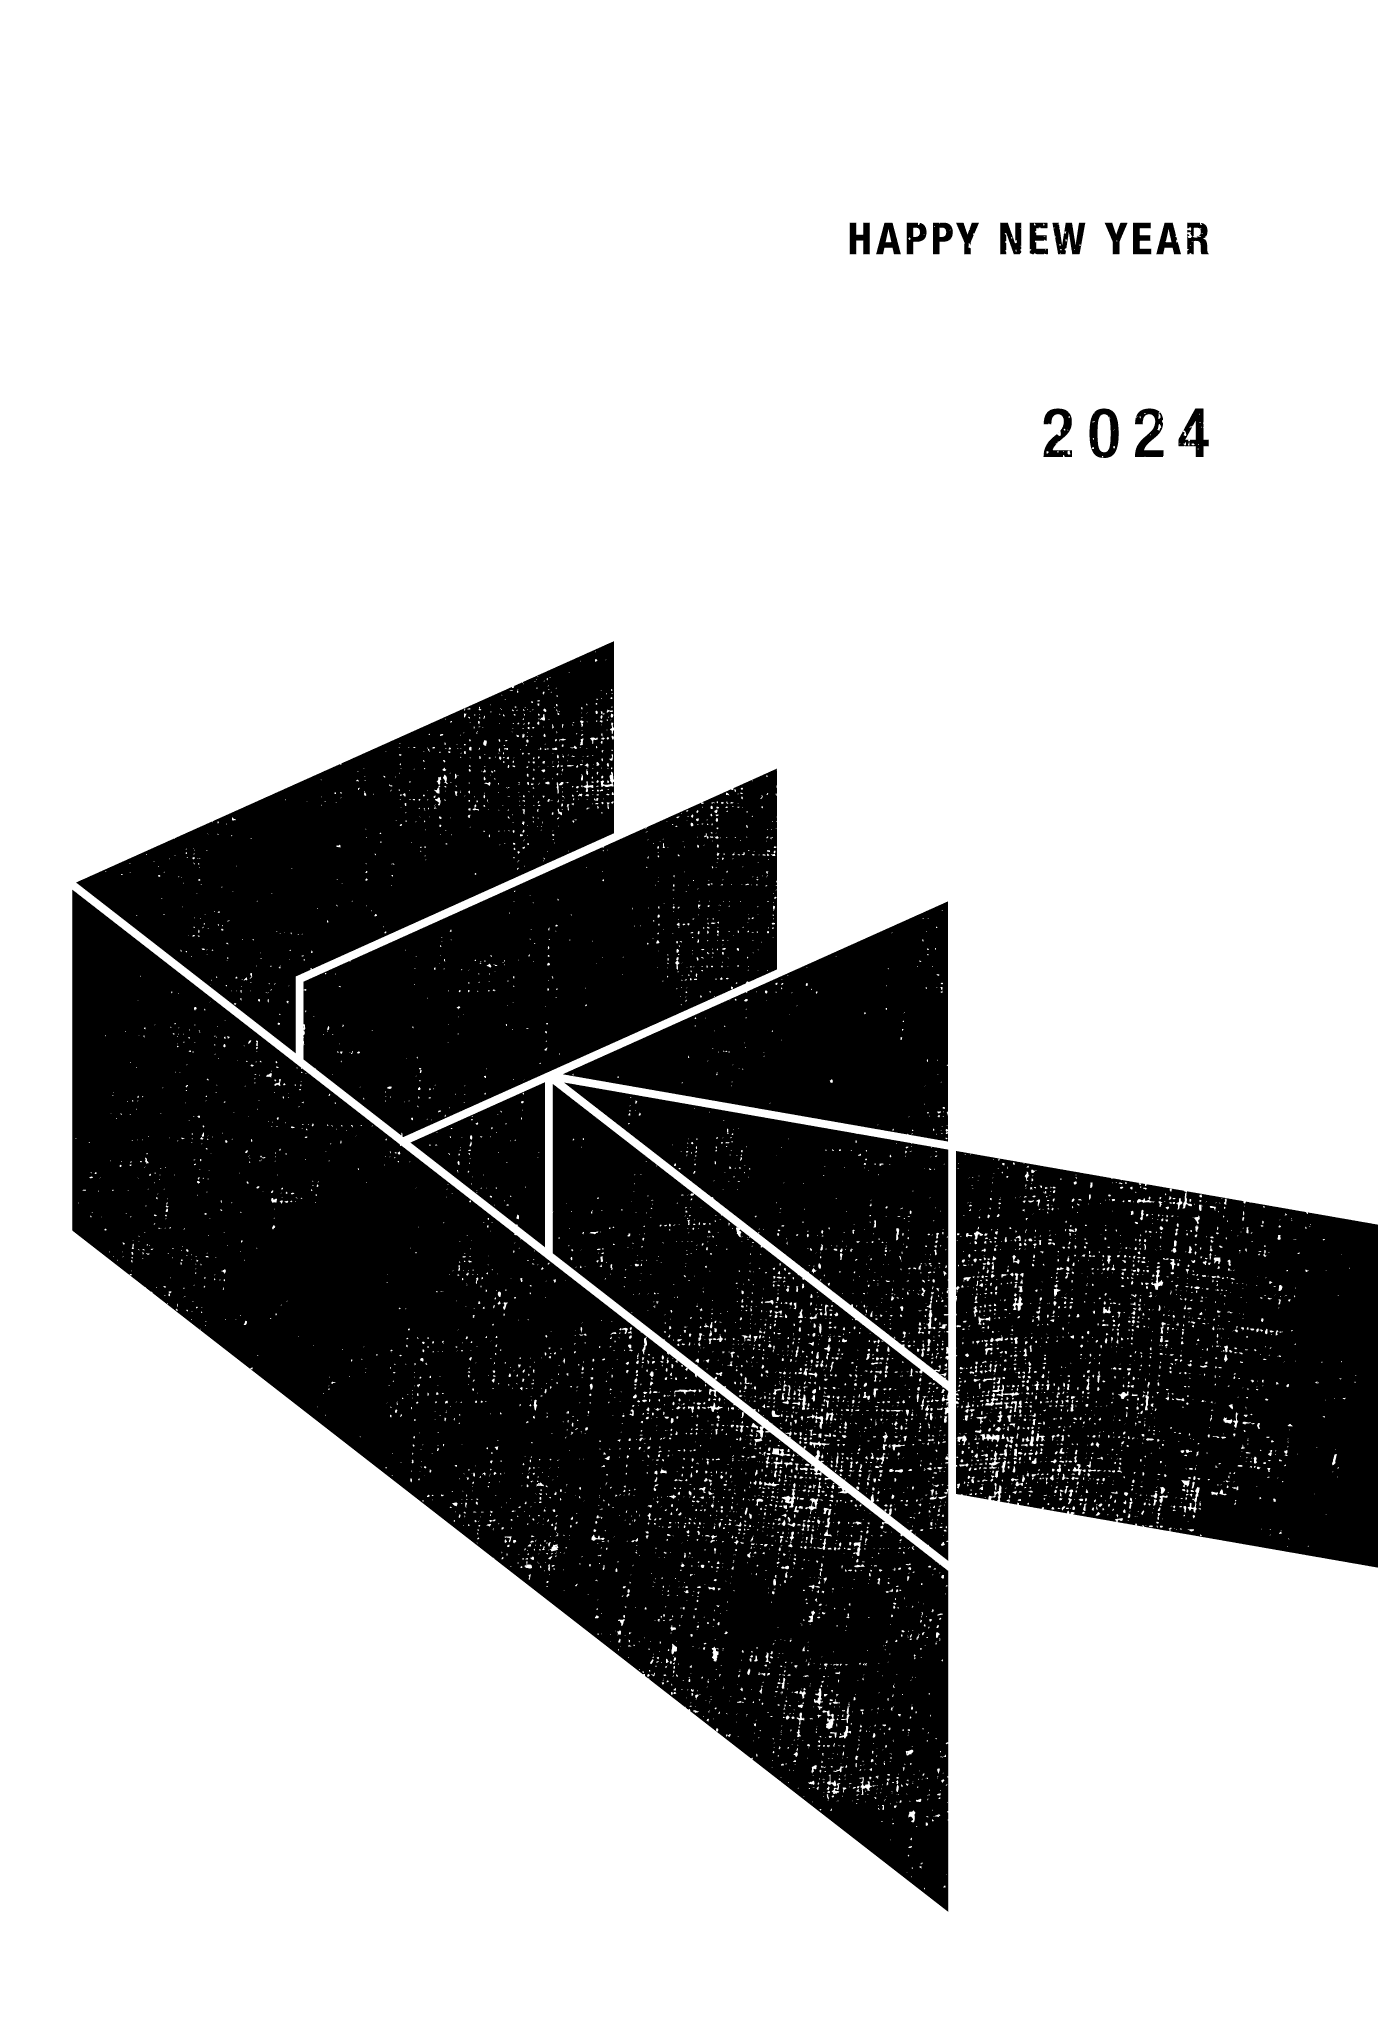 2024n11-1 / 辰の図案 (黒)のダウンロード画像